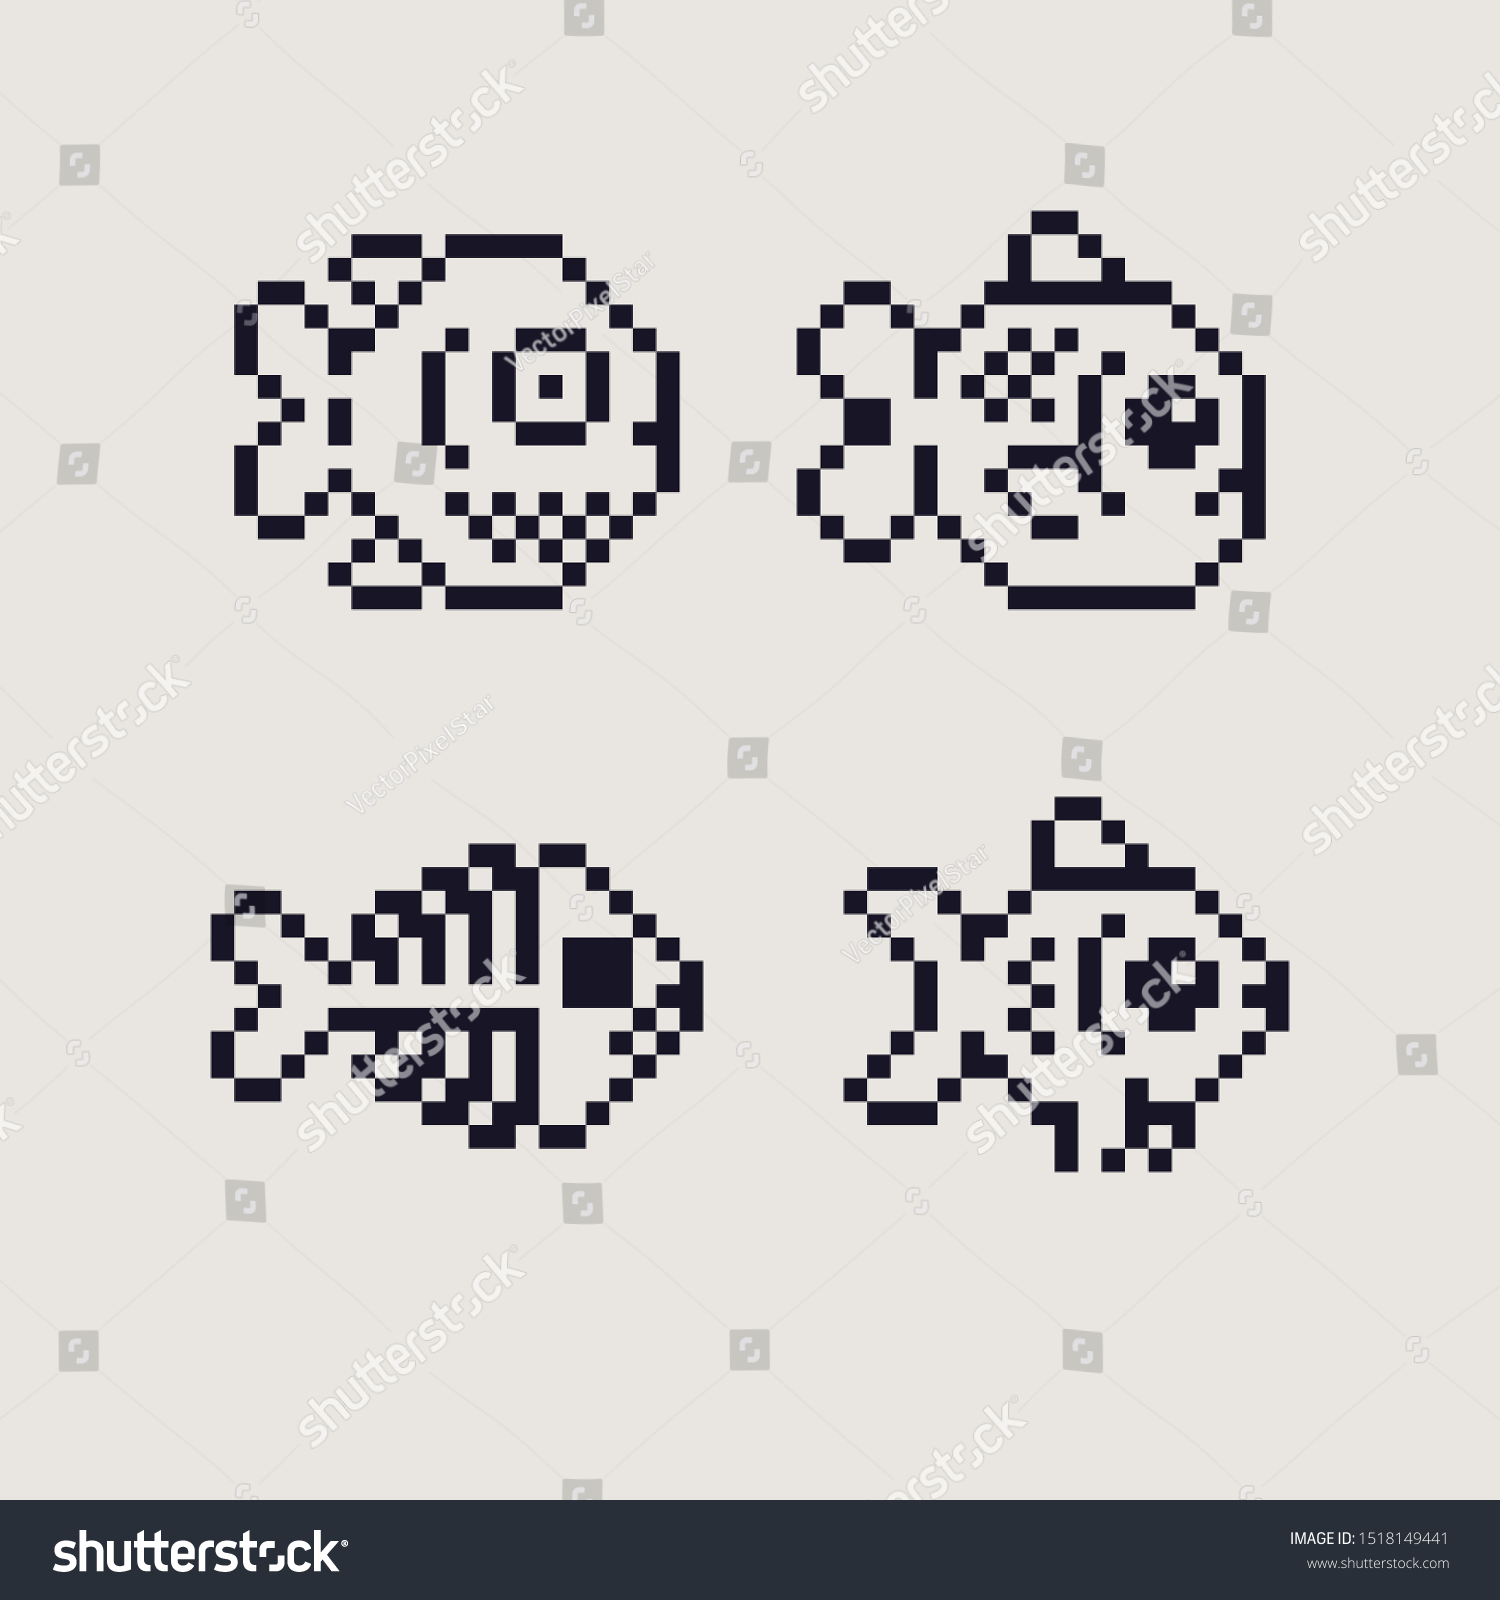 Fish Pixel Art Icons Set Design Stock Vector Royalty Free